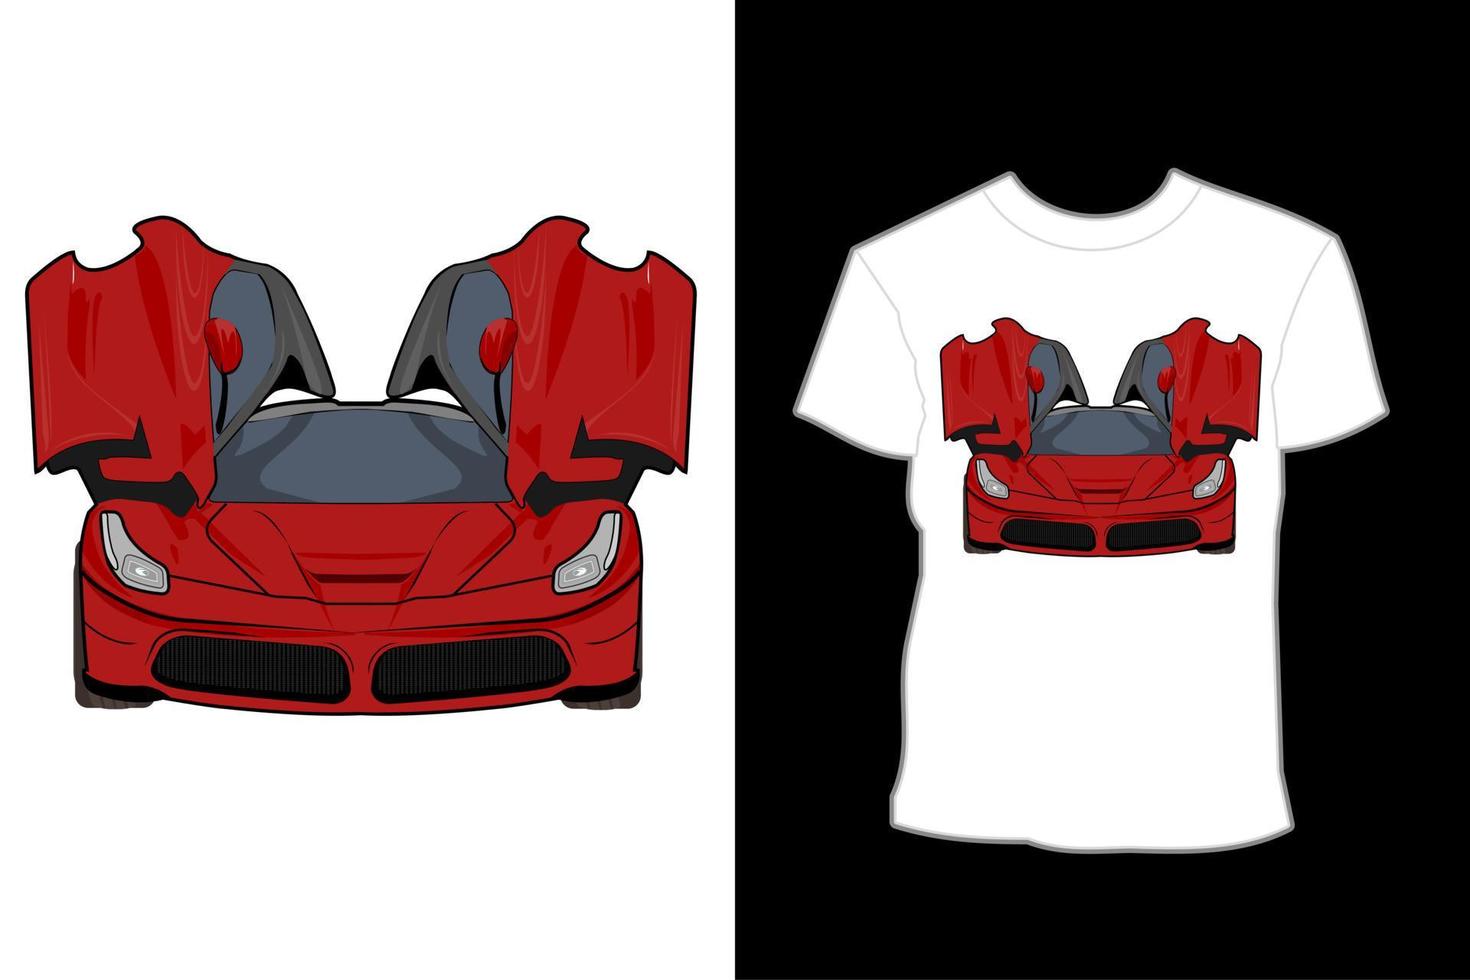 röd sportbil ferrari illustration t-shirt design vektor